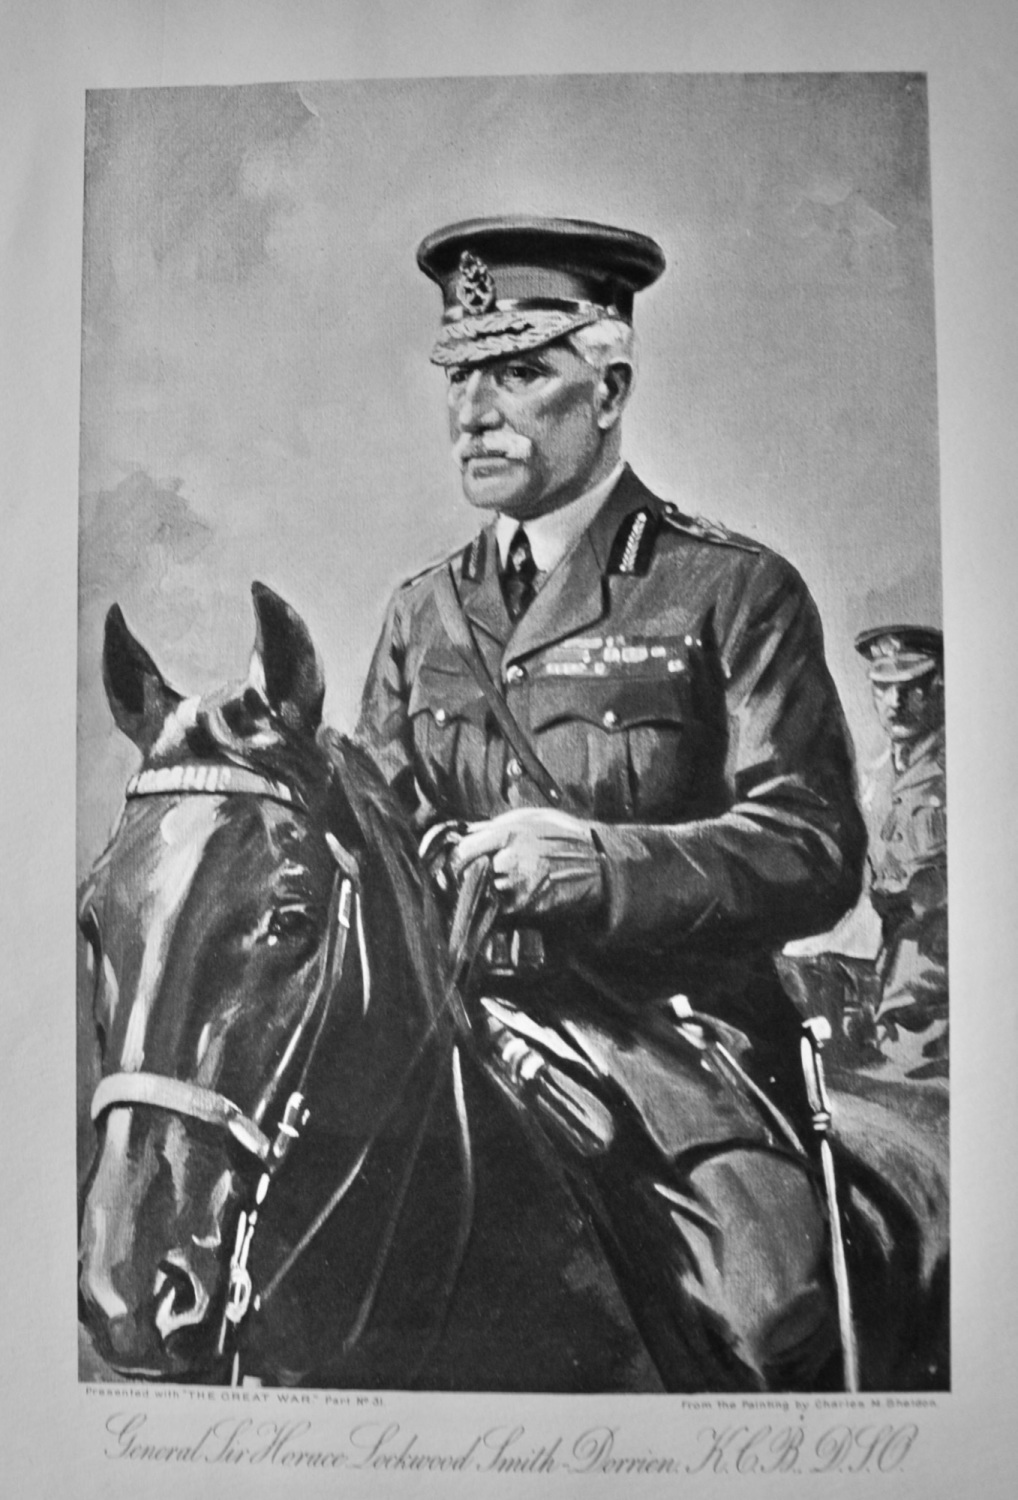 General Sir Horace Lockwood Smith-Dorrien, K.C.B., D.S.O.  (1914 - 1918 War